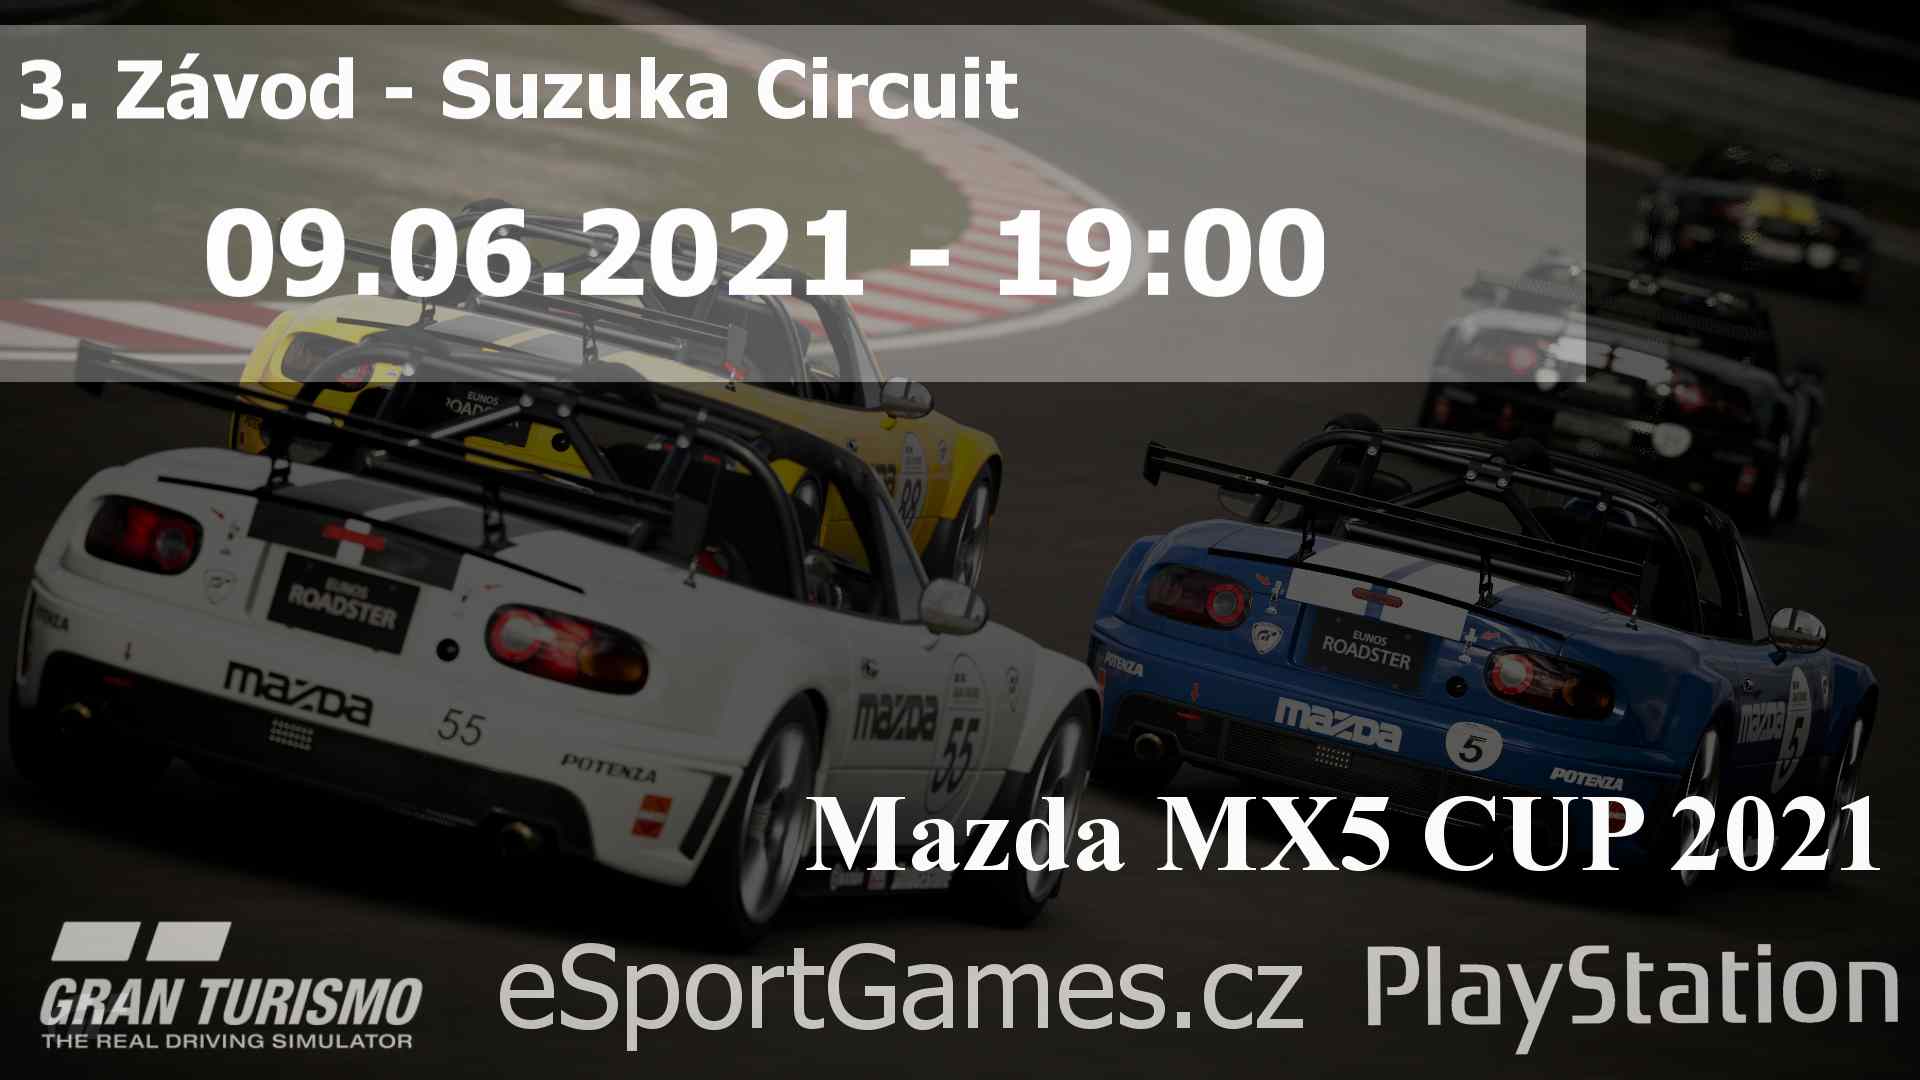 3. Závod - MX5 CUP 2021 - Suzuka Circuit